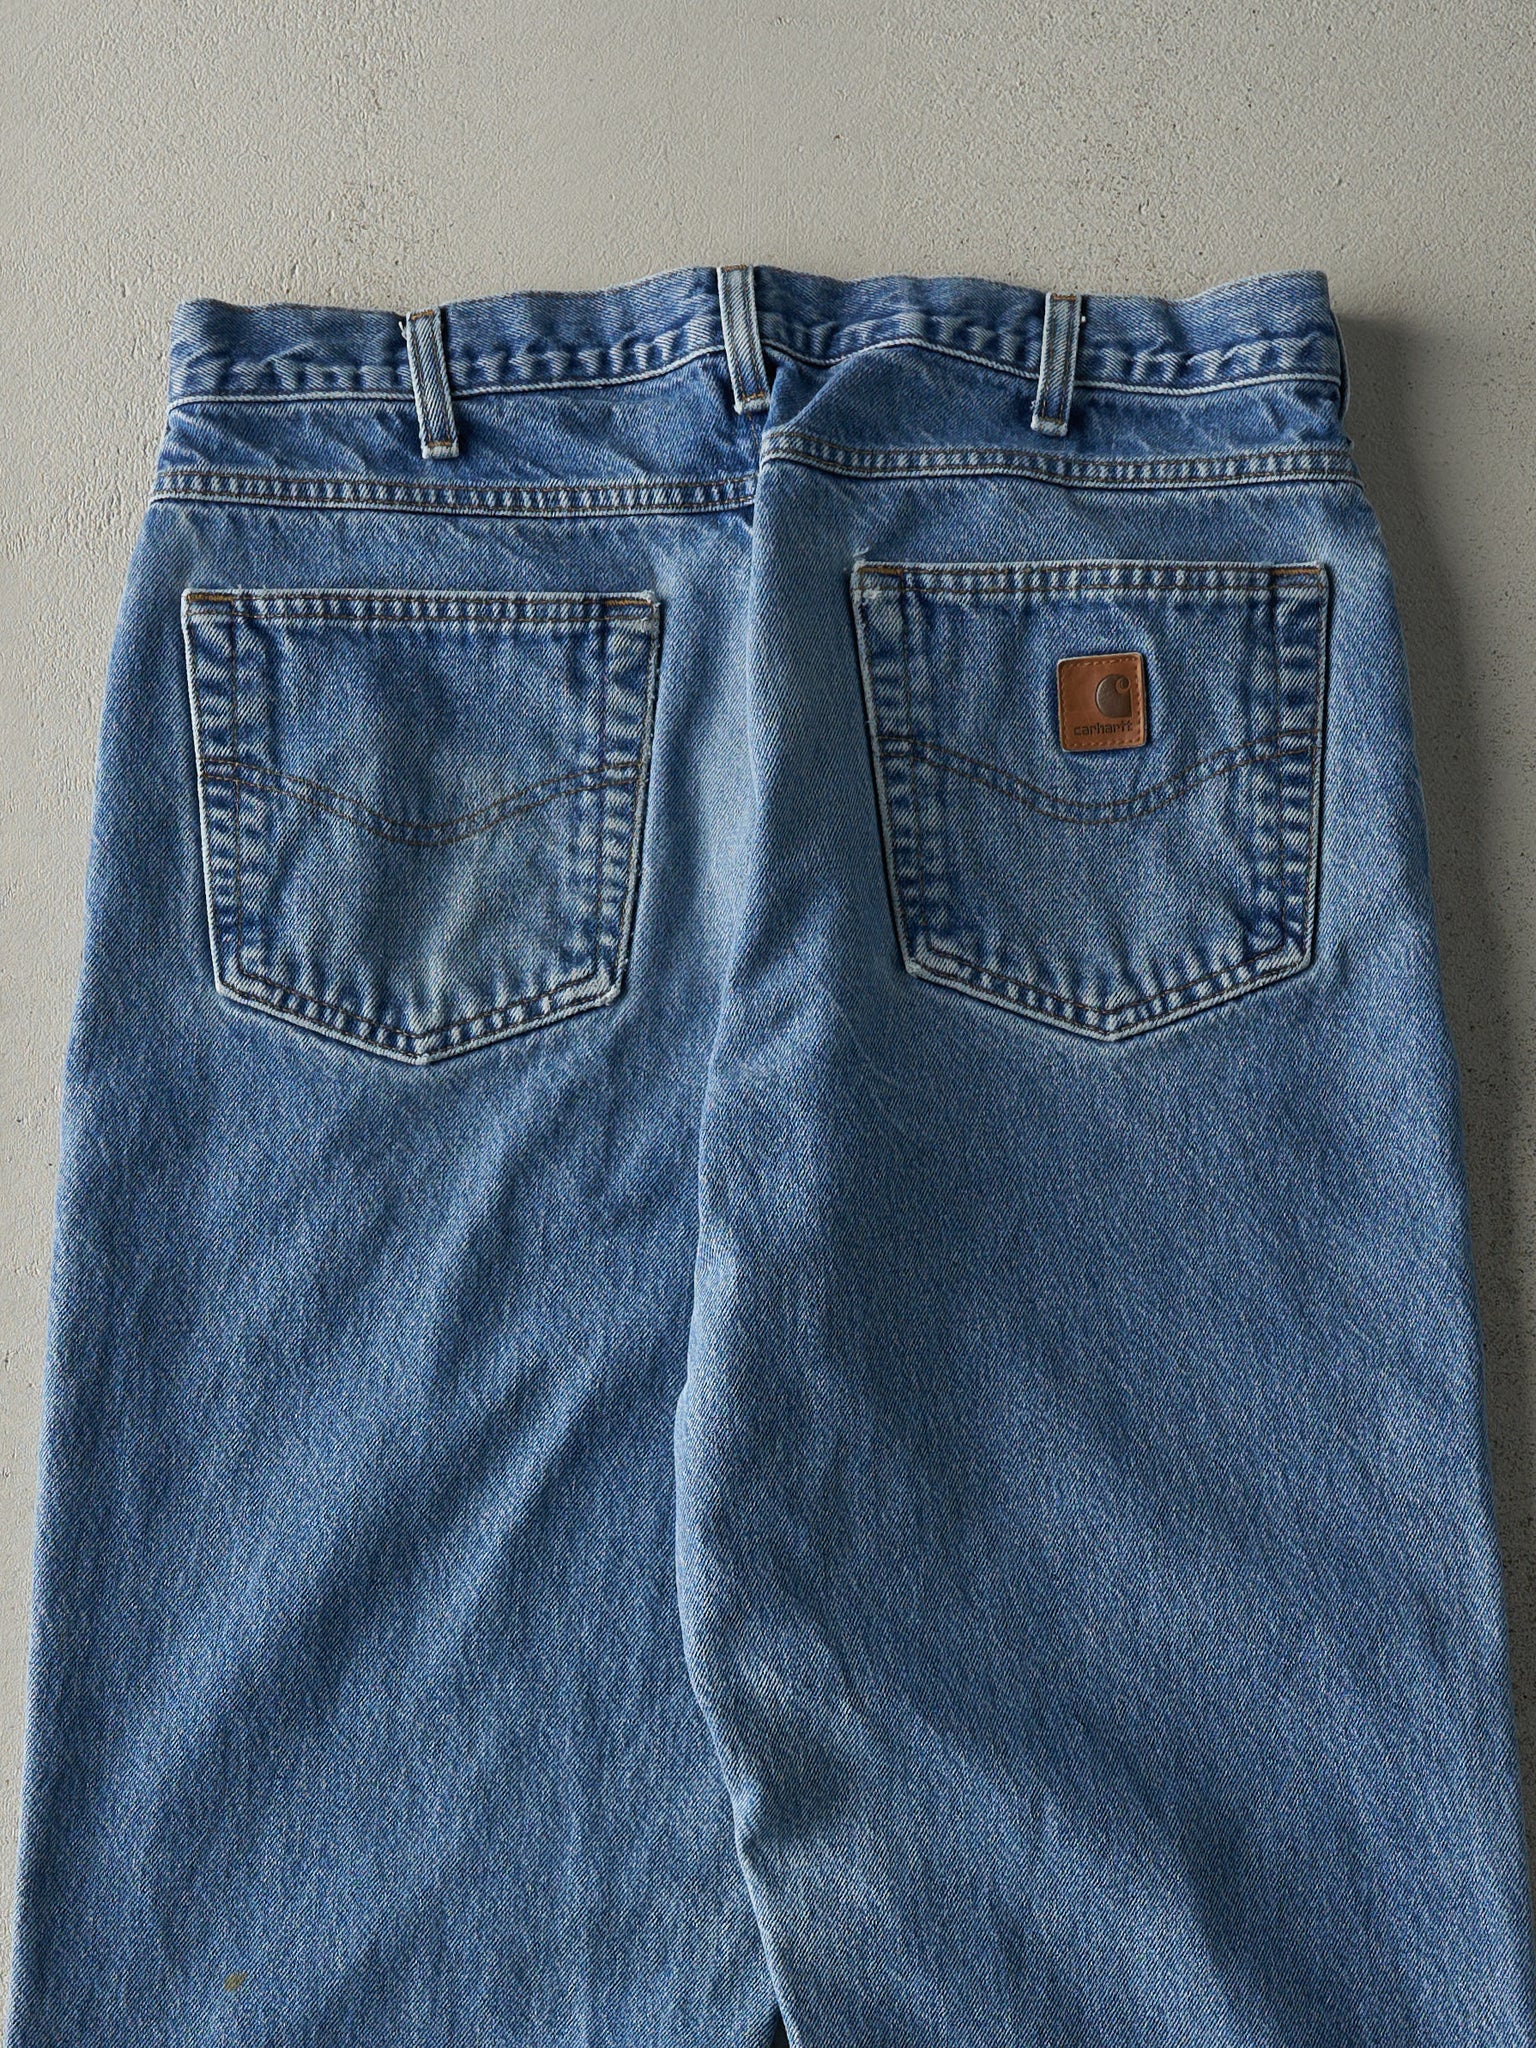 Vintage Y2K Mid Wash Carhartt Jeans (34x33.5)